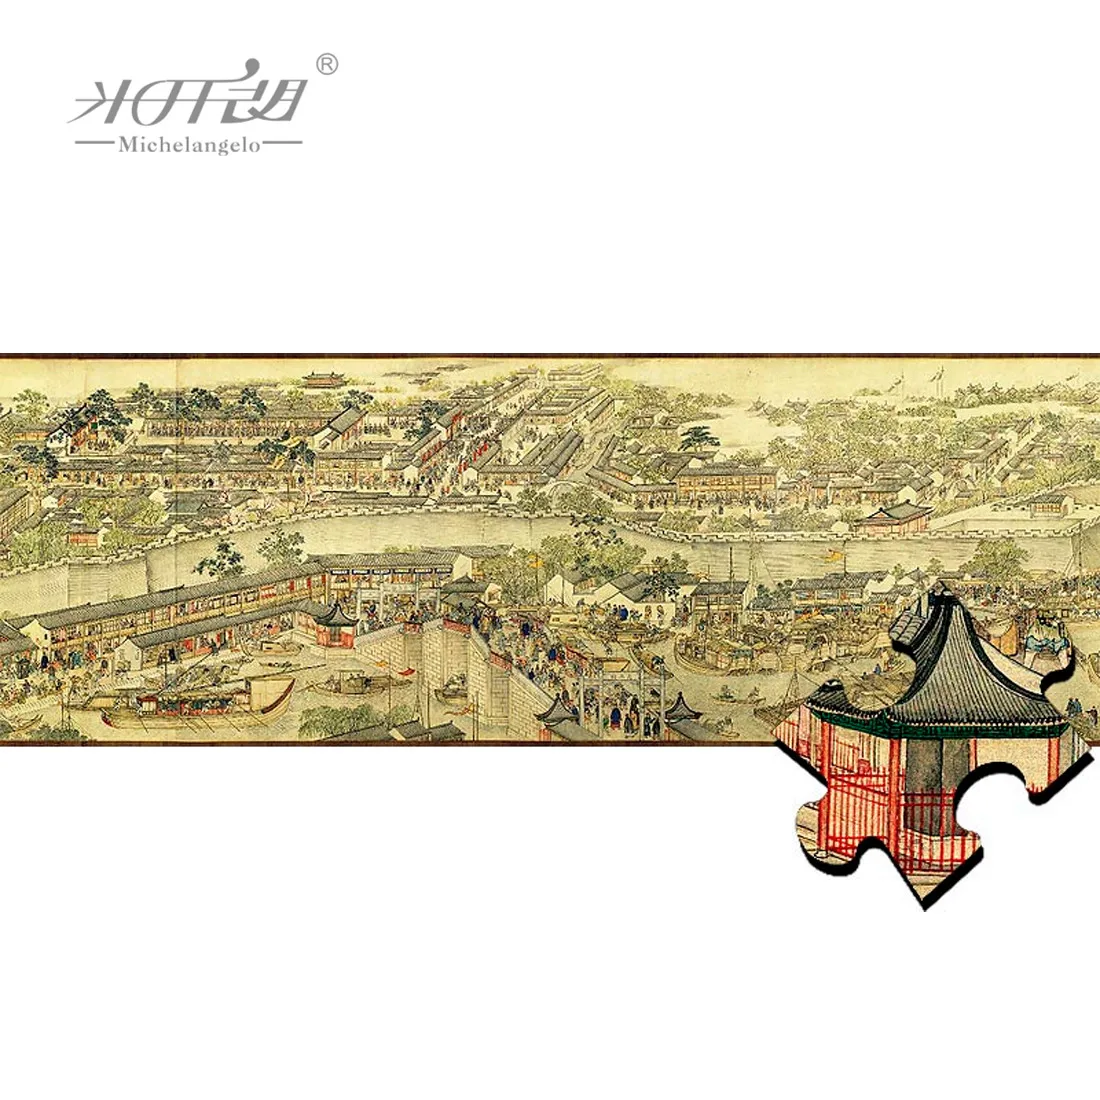 michelangelo-quebra-cabeca-de-madeira-1200-peca-suzhou-idade-dourada-ponte-wannian-brinquedo-educacional-collectibles-pintura-decoracao-da-sua-casa